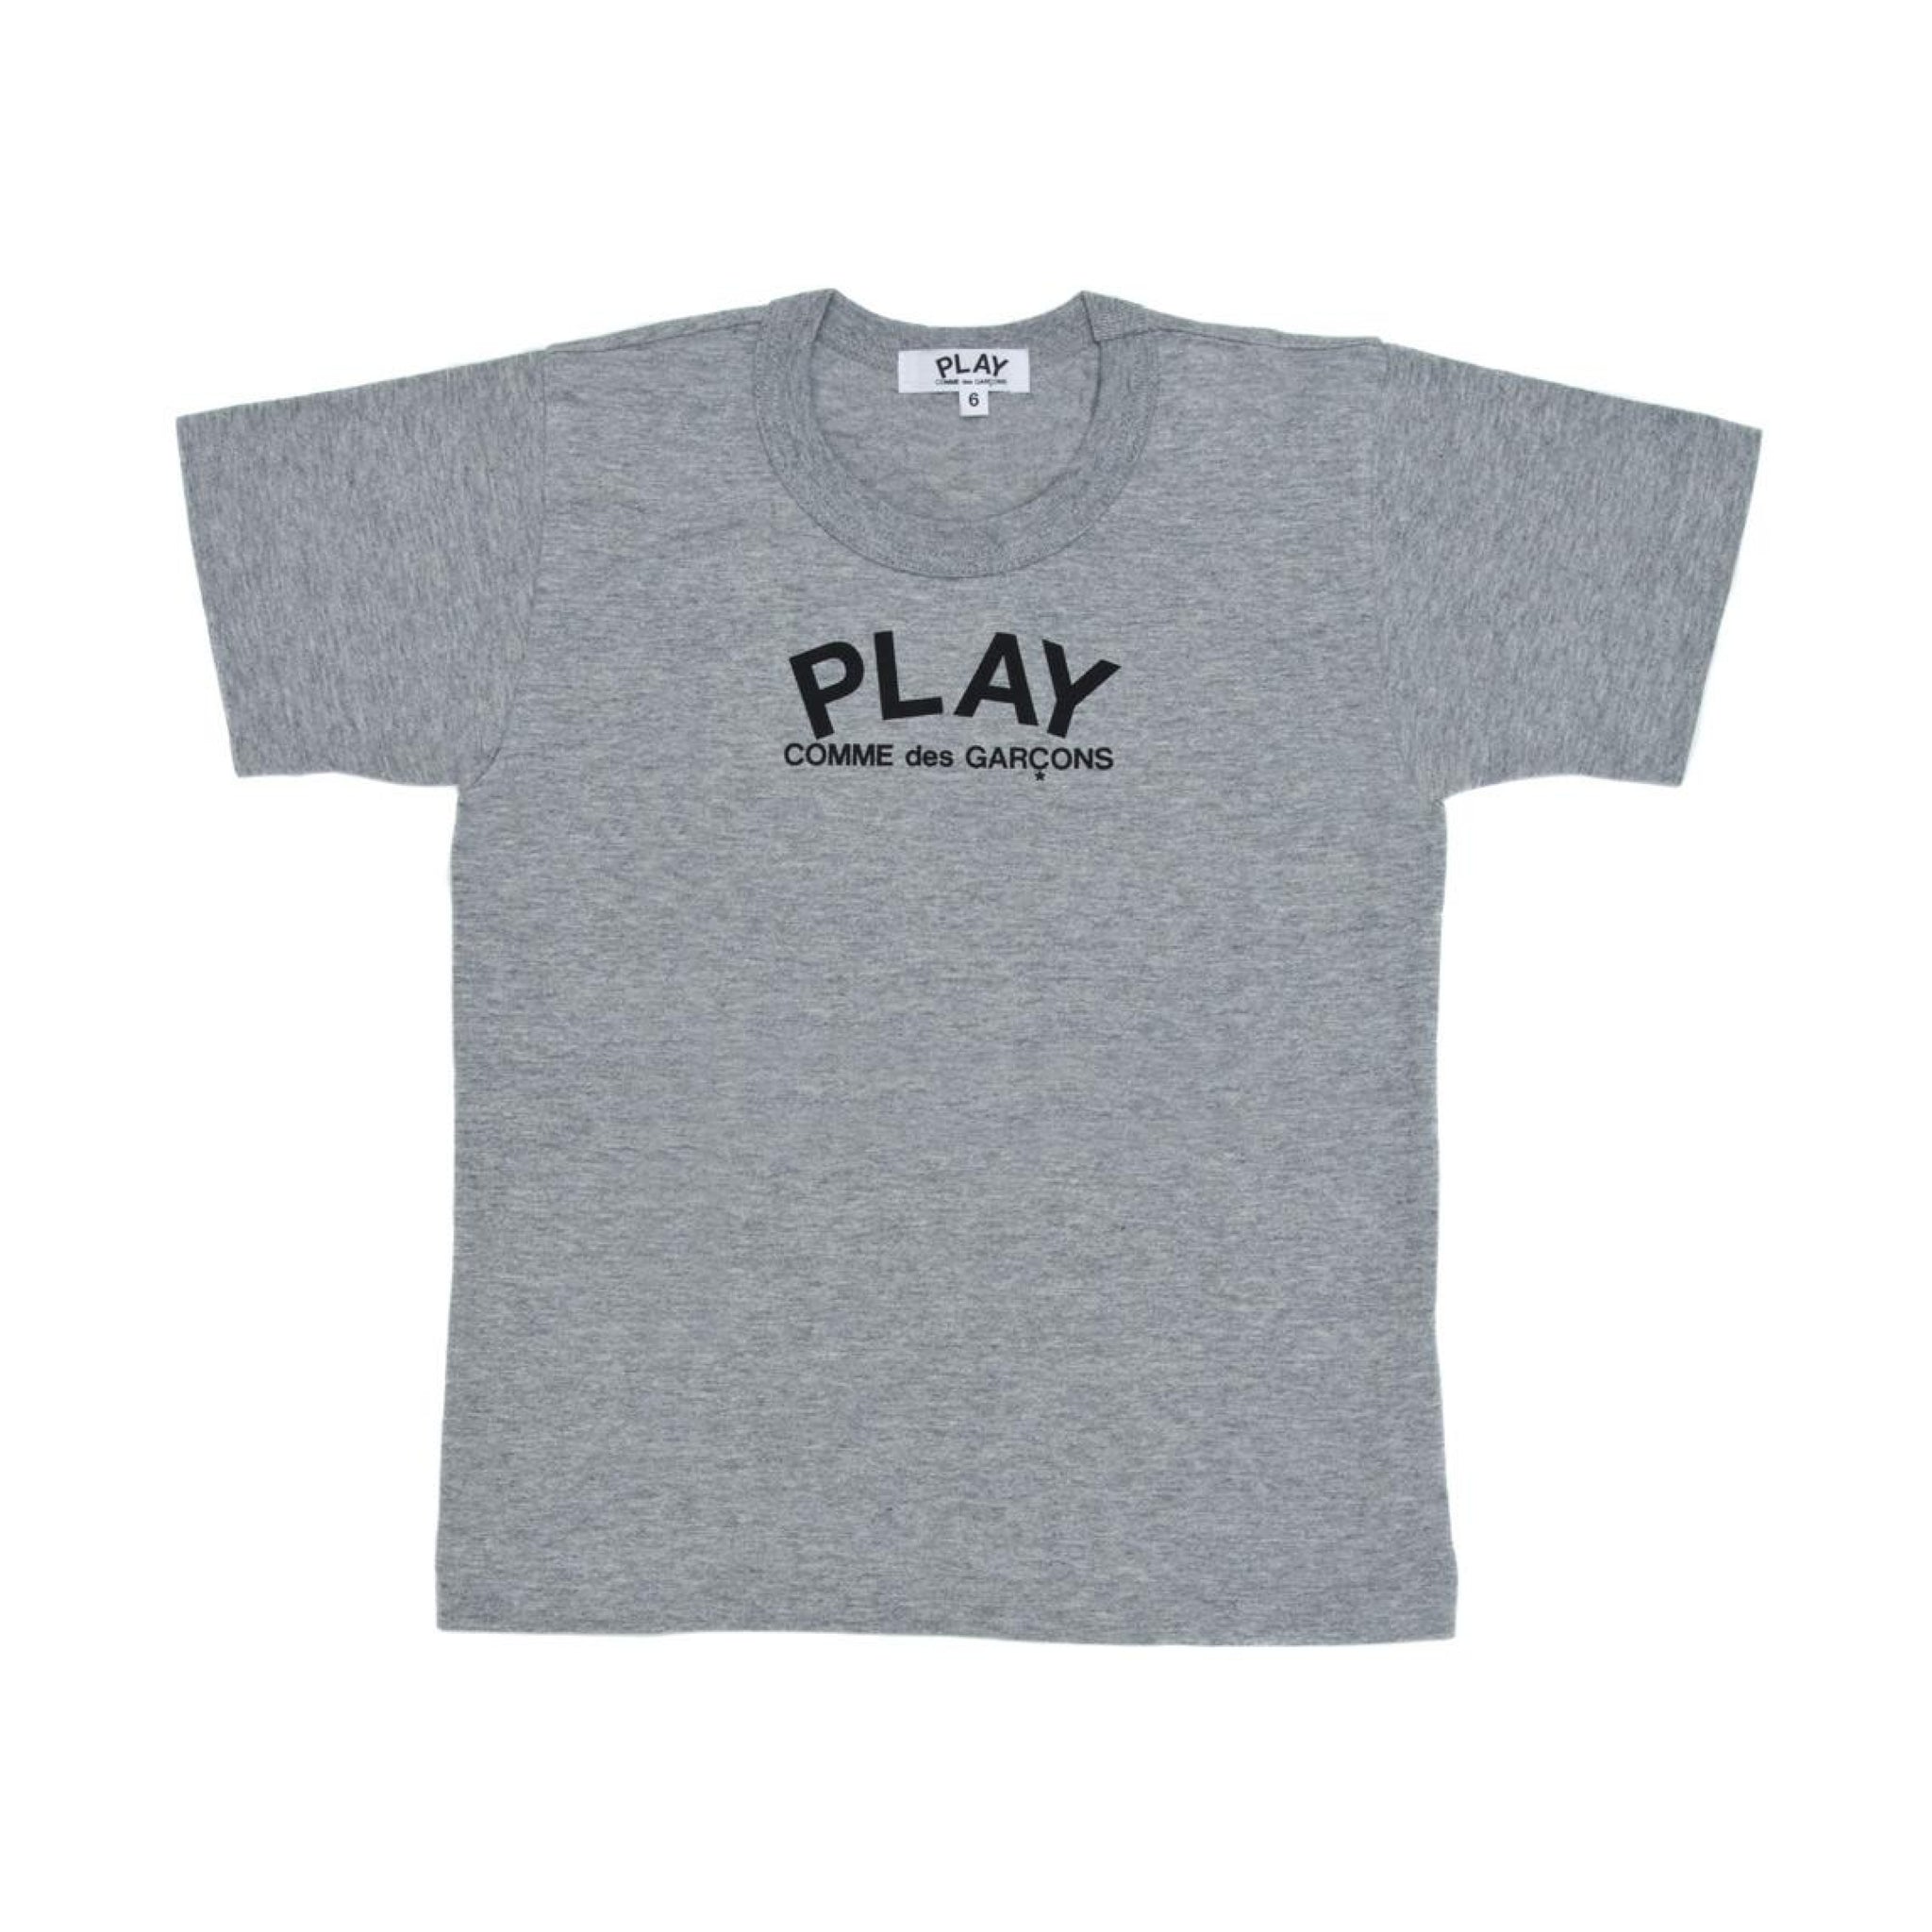 PLAY Kids T-Shirt Black Text and Black Heart